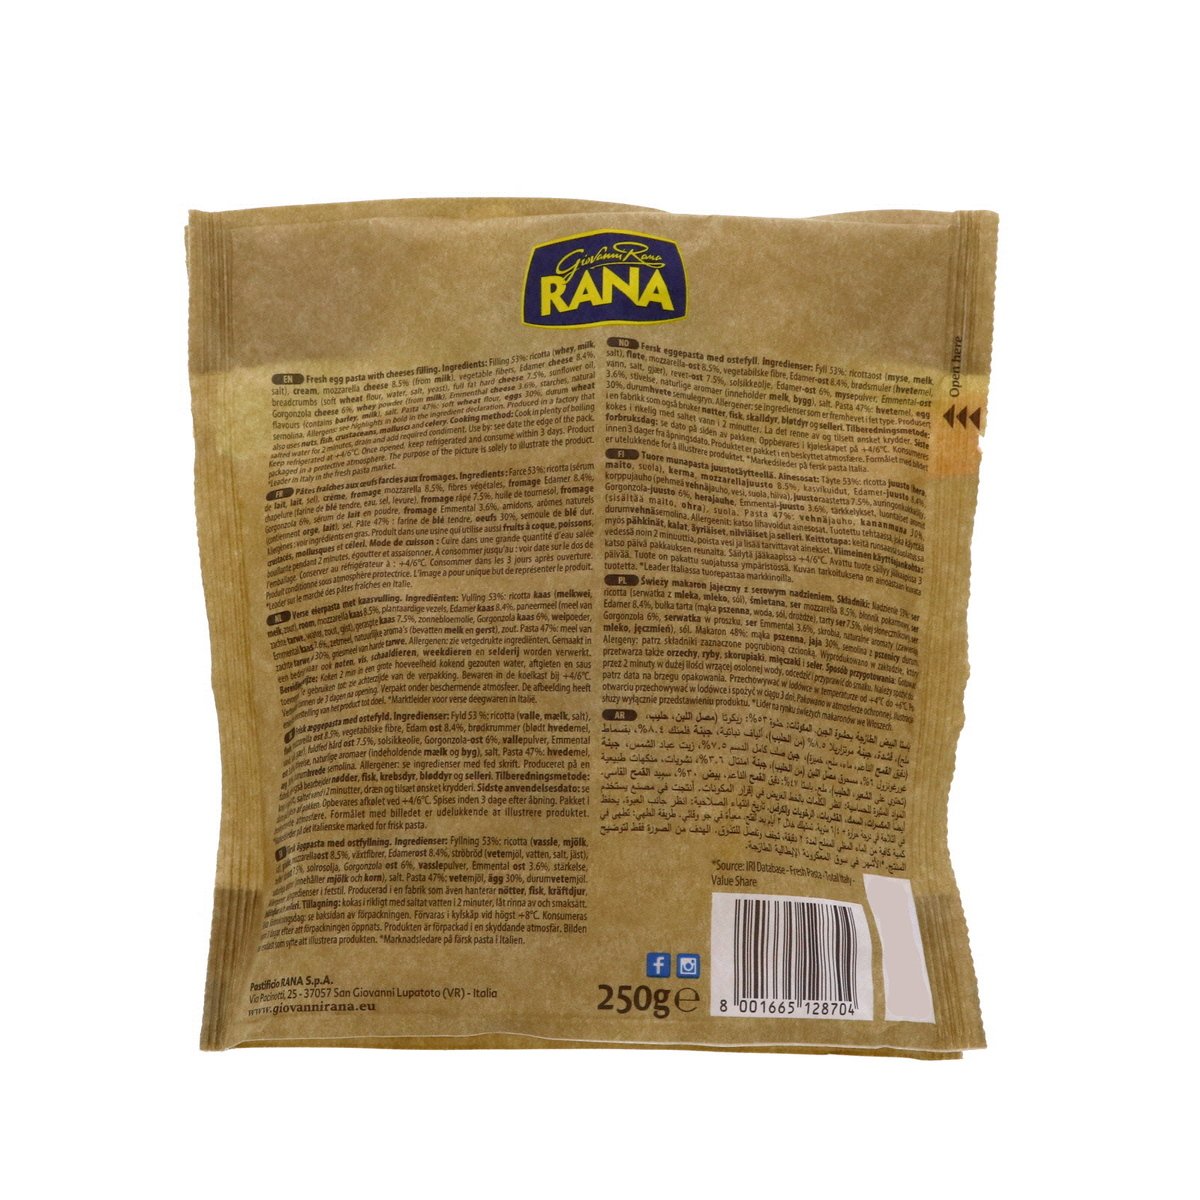 Rana Ravioli Formaggi with 4 Cheese 250 g